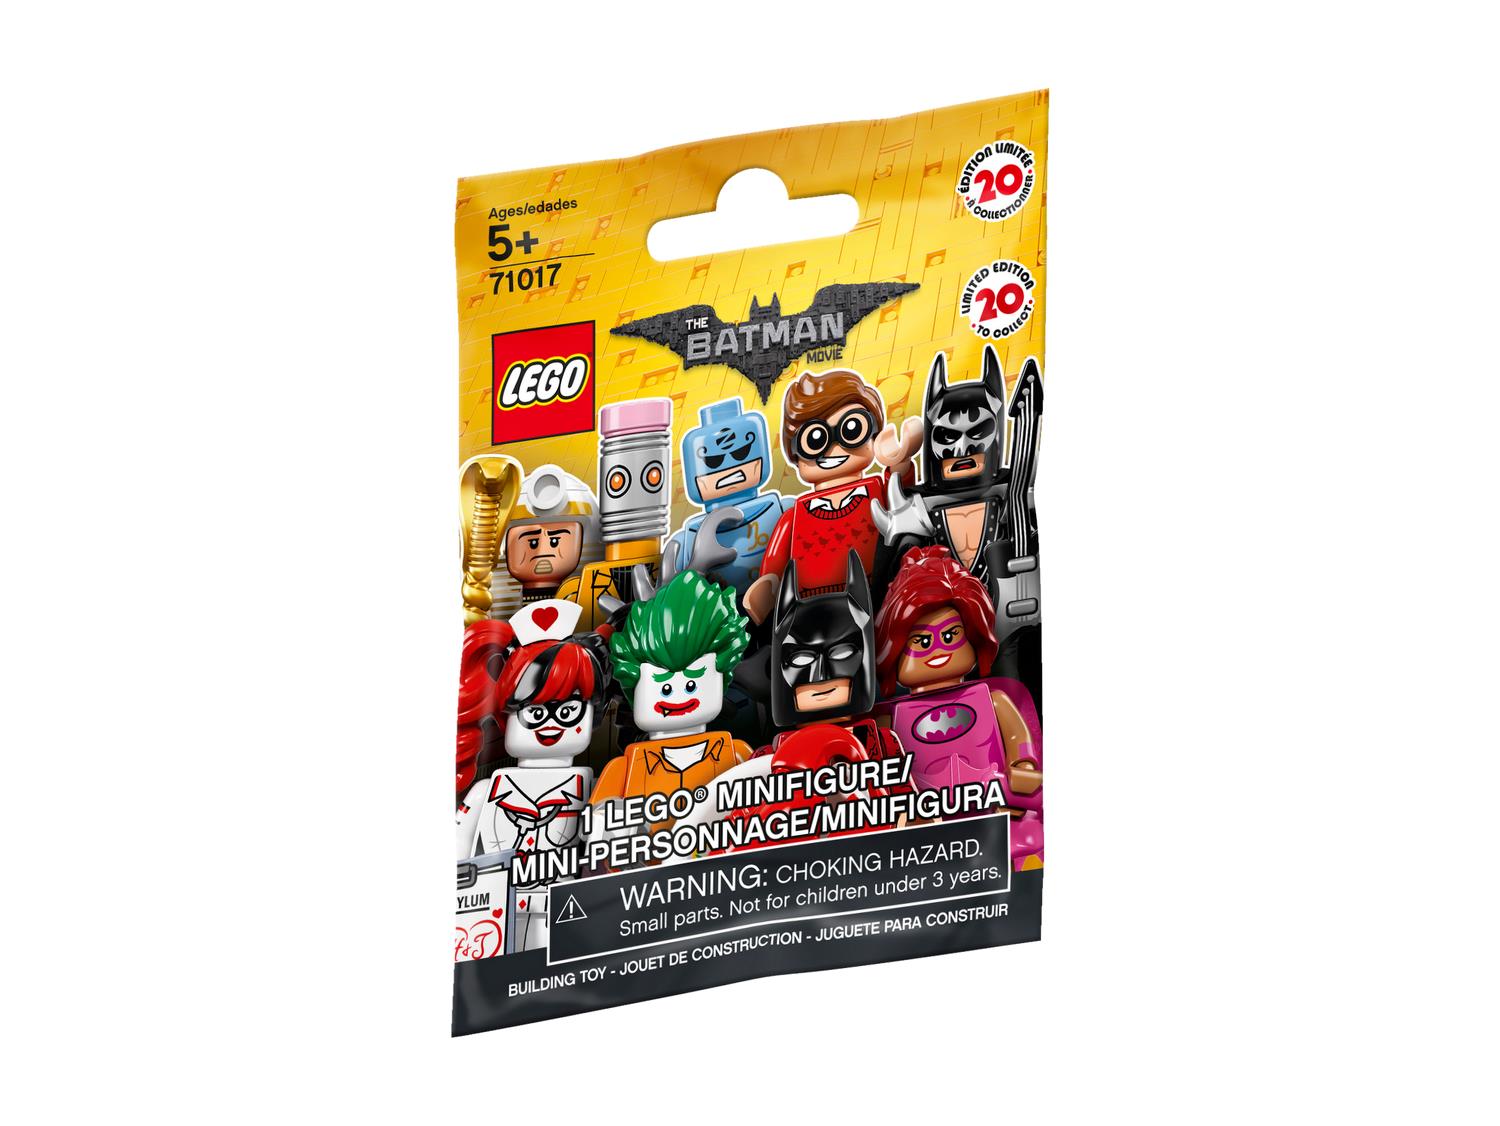 LEGO MINIFIGURES Factory Sealed! Catman -THE BATMAN MOVIE 71017 